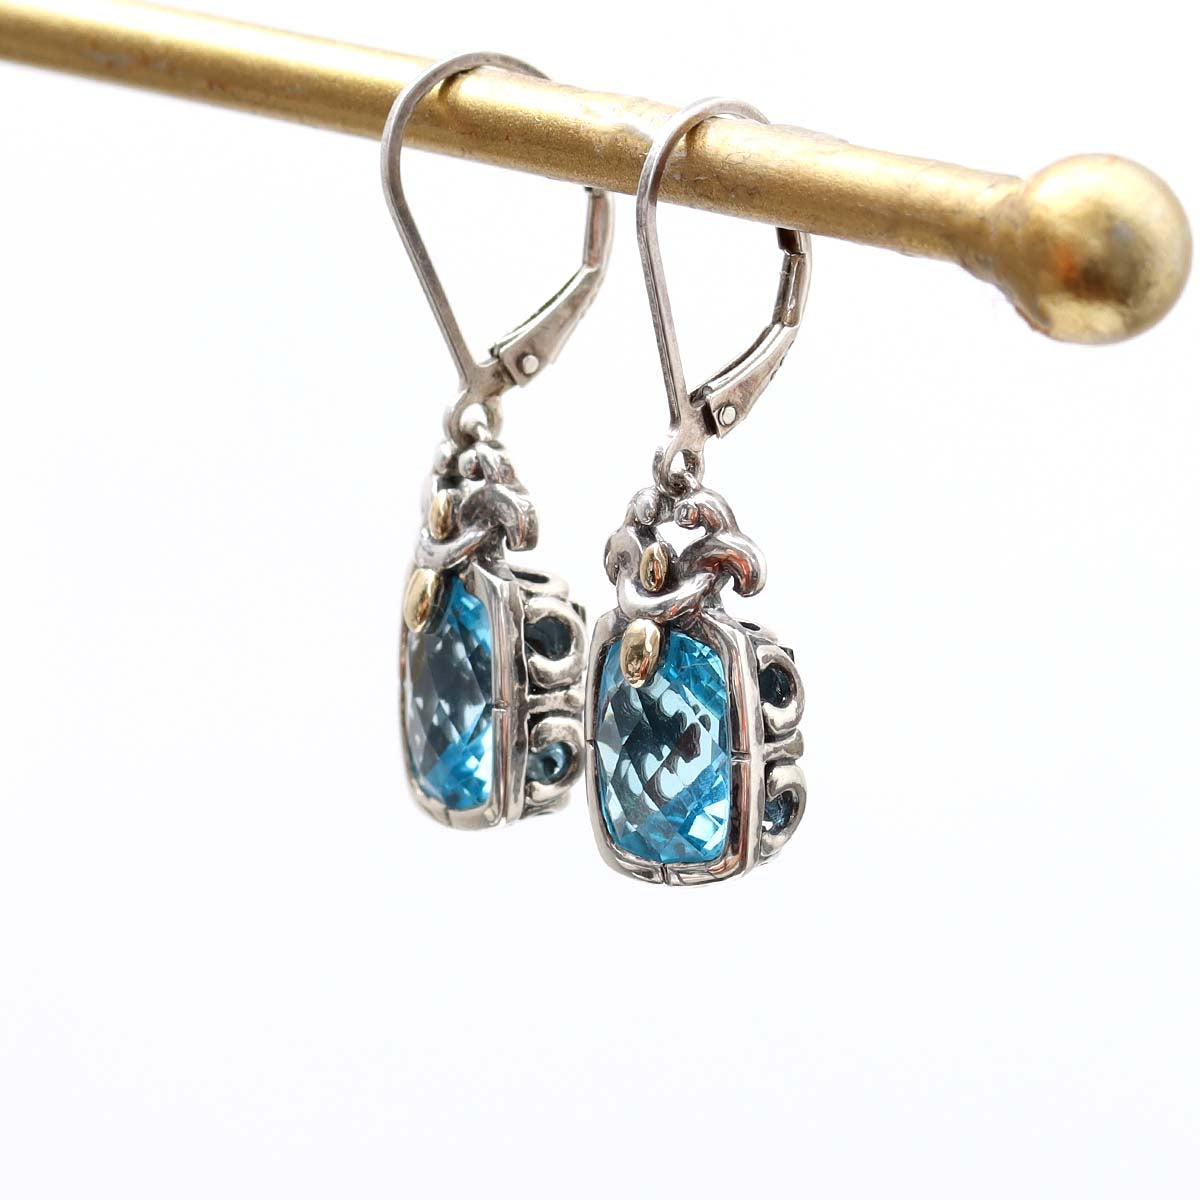 Vintage Inspired Blue Topaz and Sterling Silver Earrings #8117E-BT